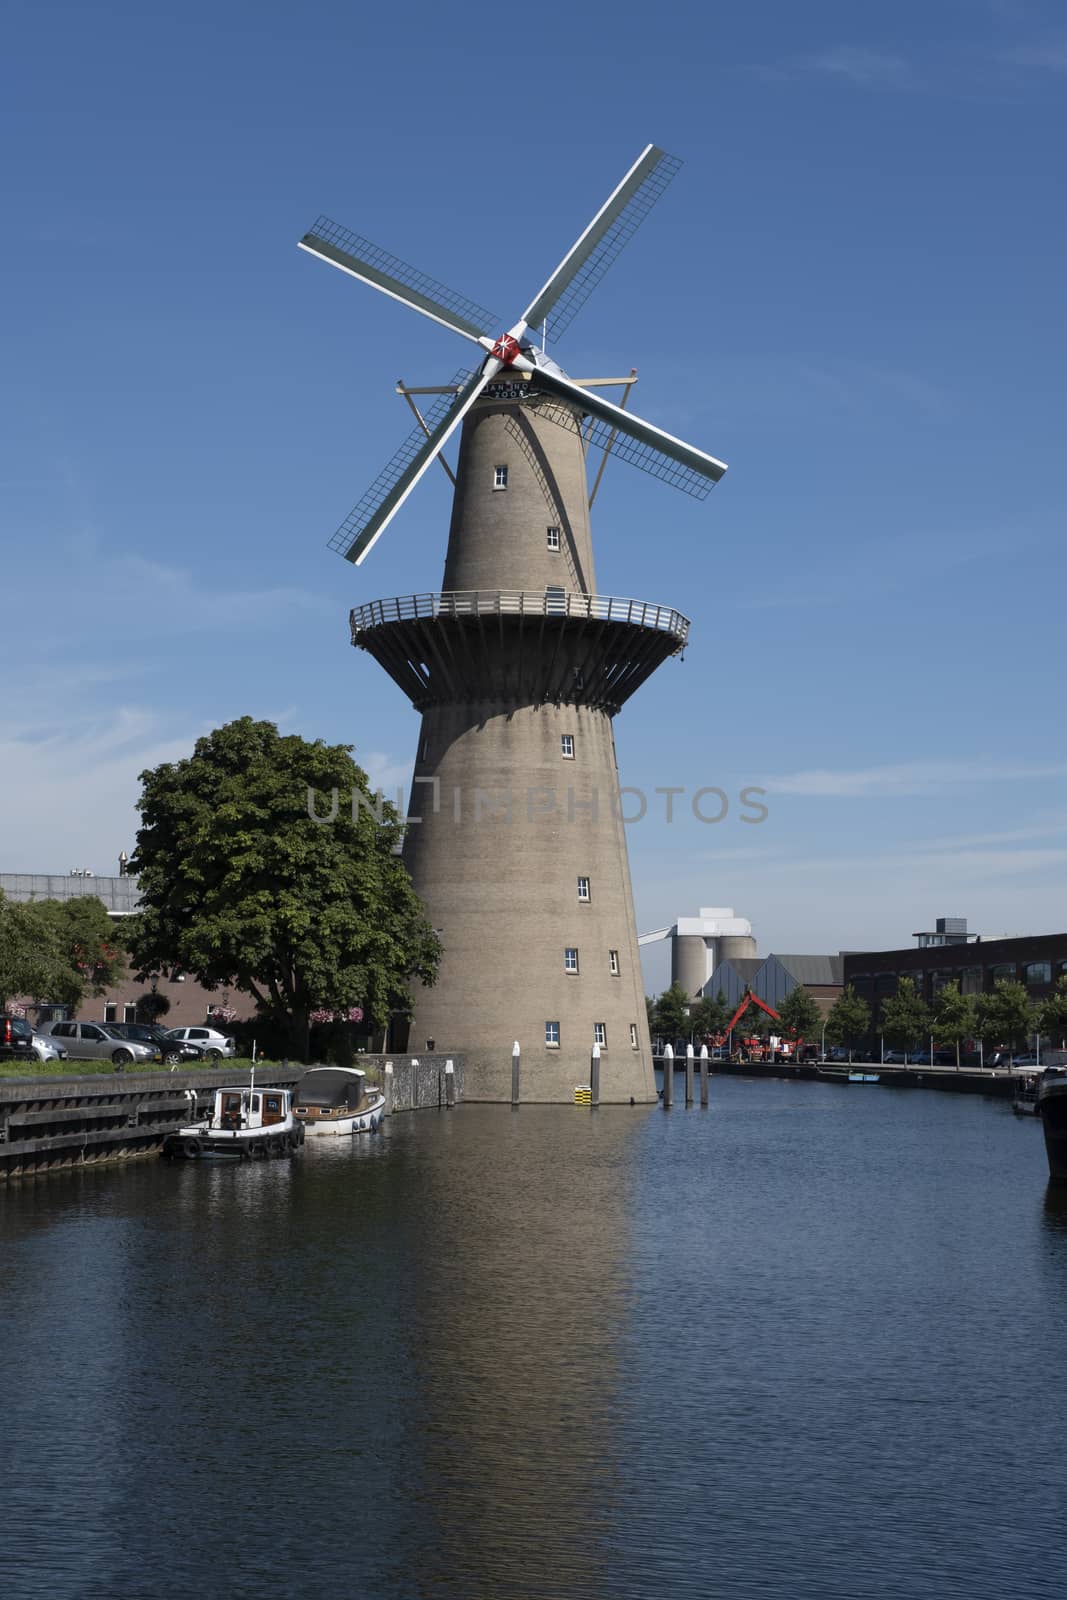 Large Dutch early Industrial Revolution windmill in Schiedam, Holland by Tjeerdkruse